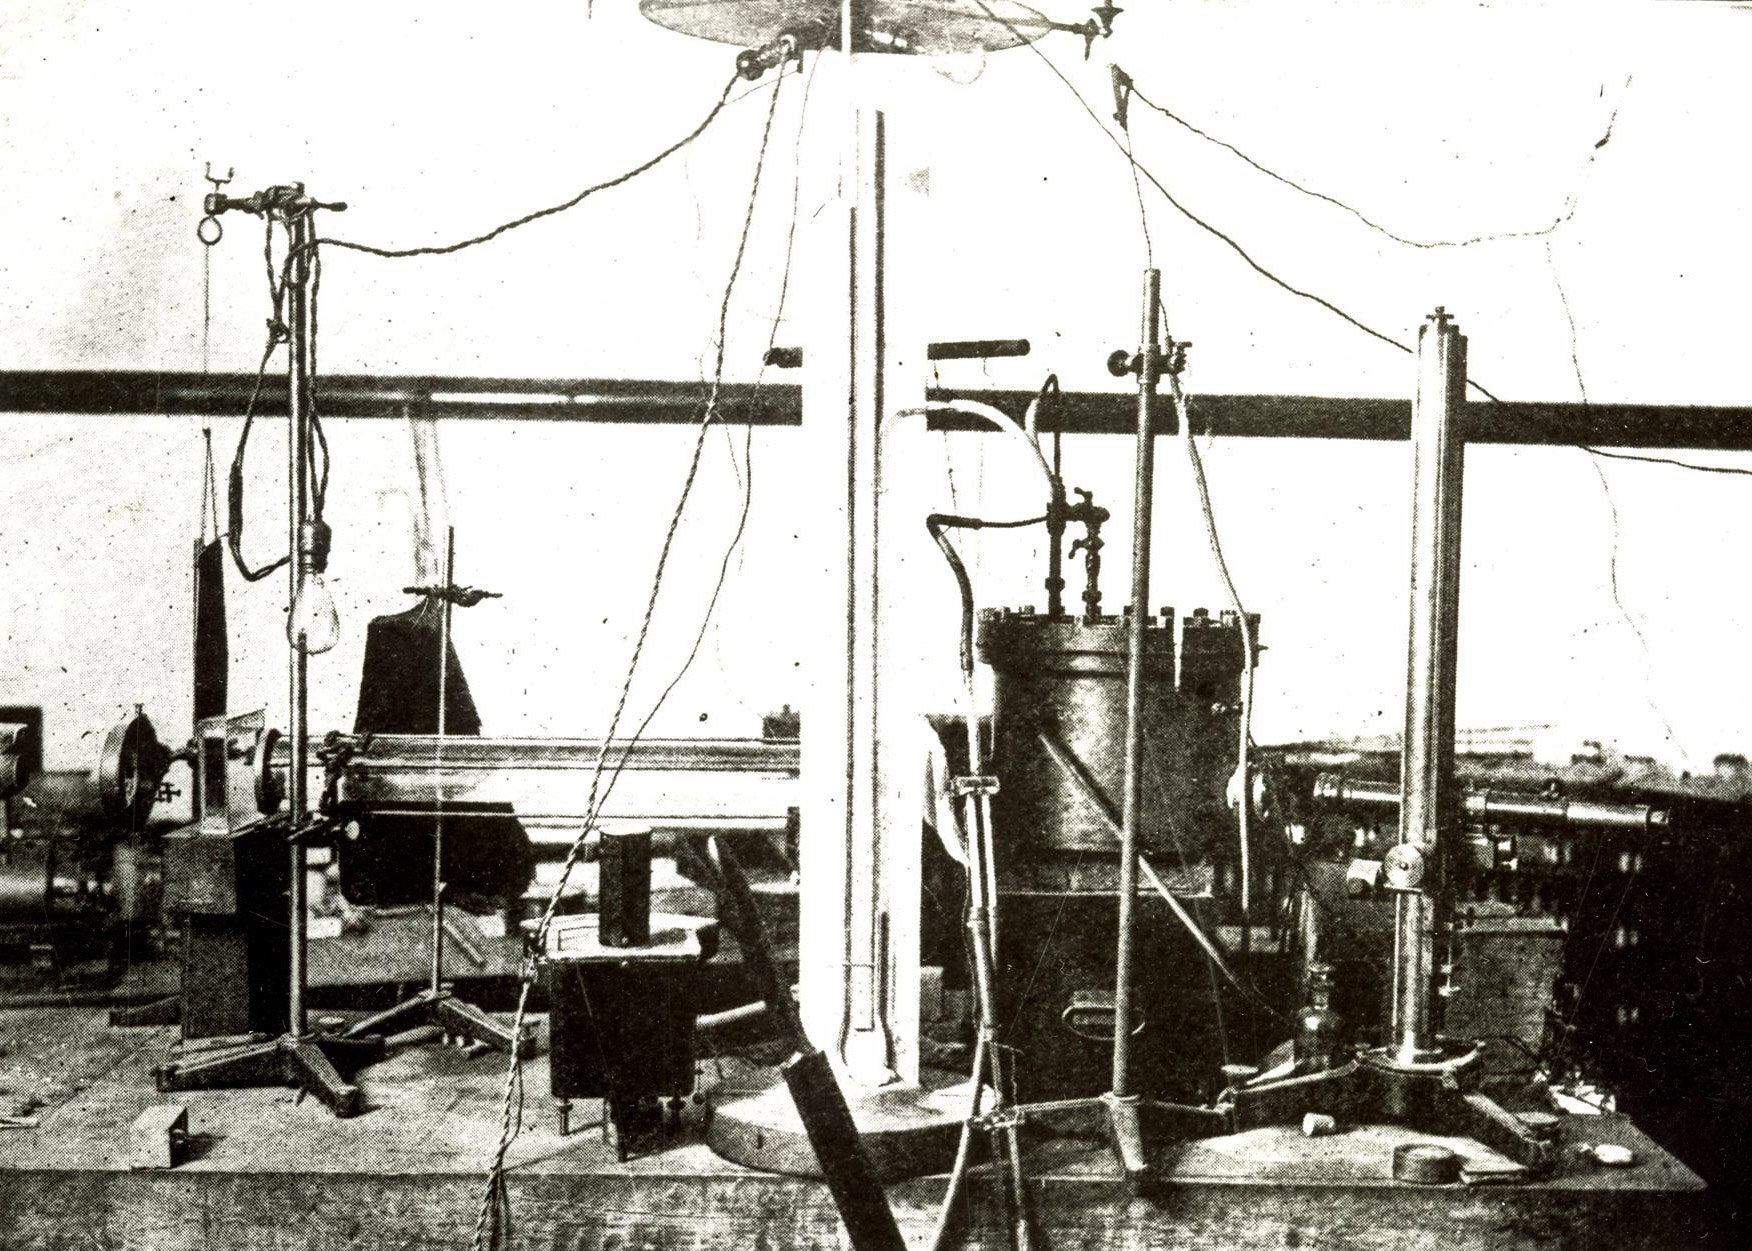 millikan's apparatus